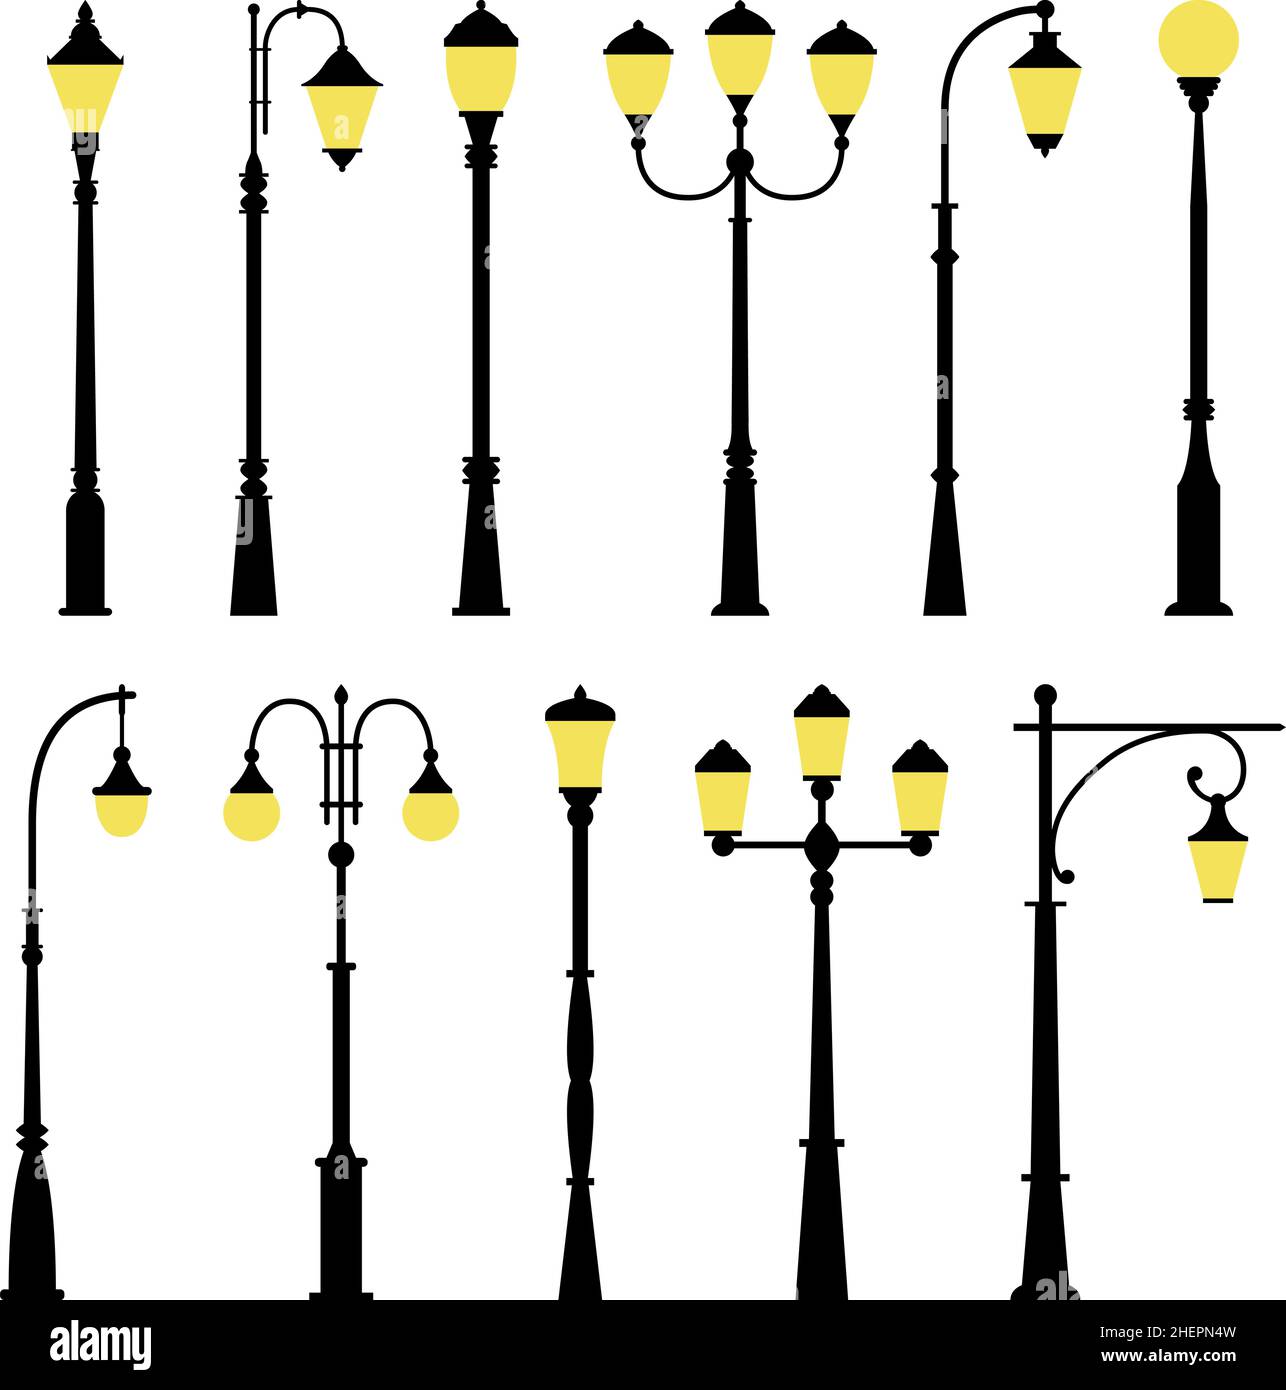 Set of street lamps, vector illustration Stock Vector